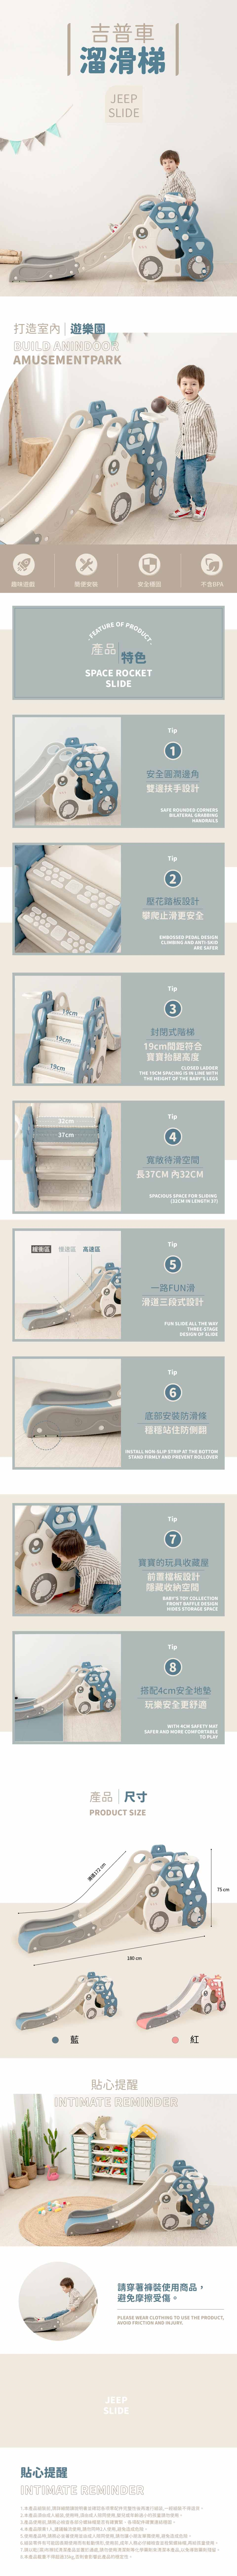 proimages/product/00025641_豪華加大汽車溜滑梯-粉紅藍-1.jpg